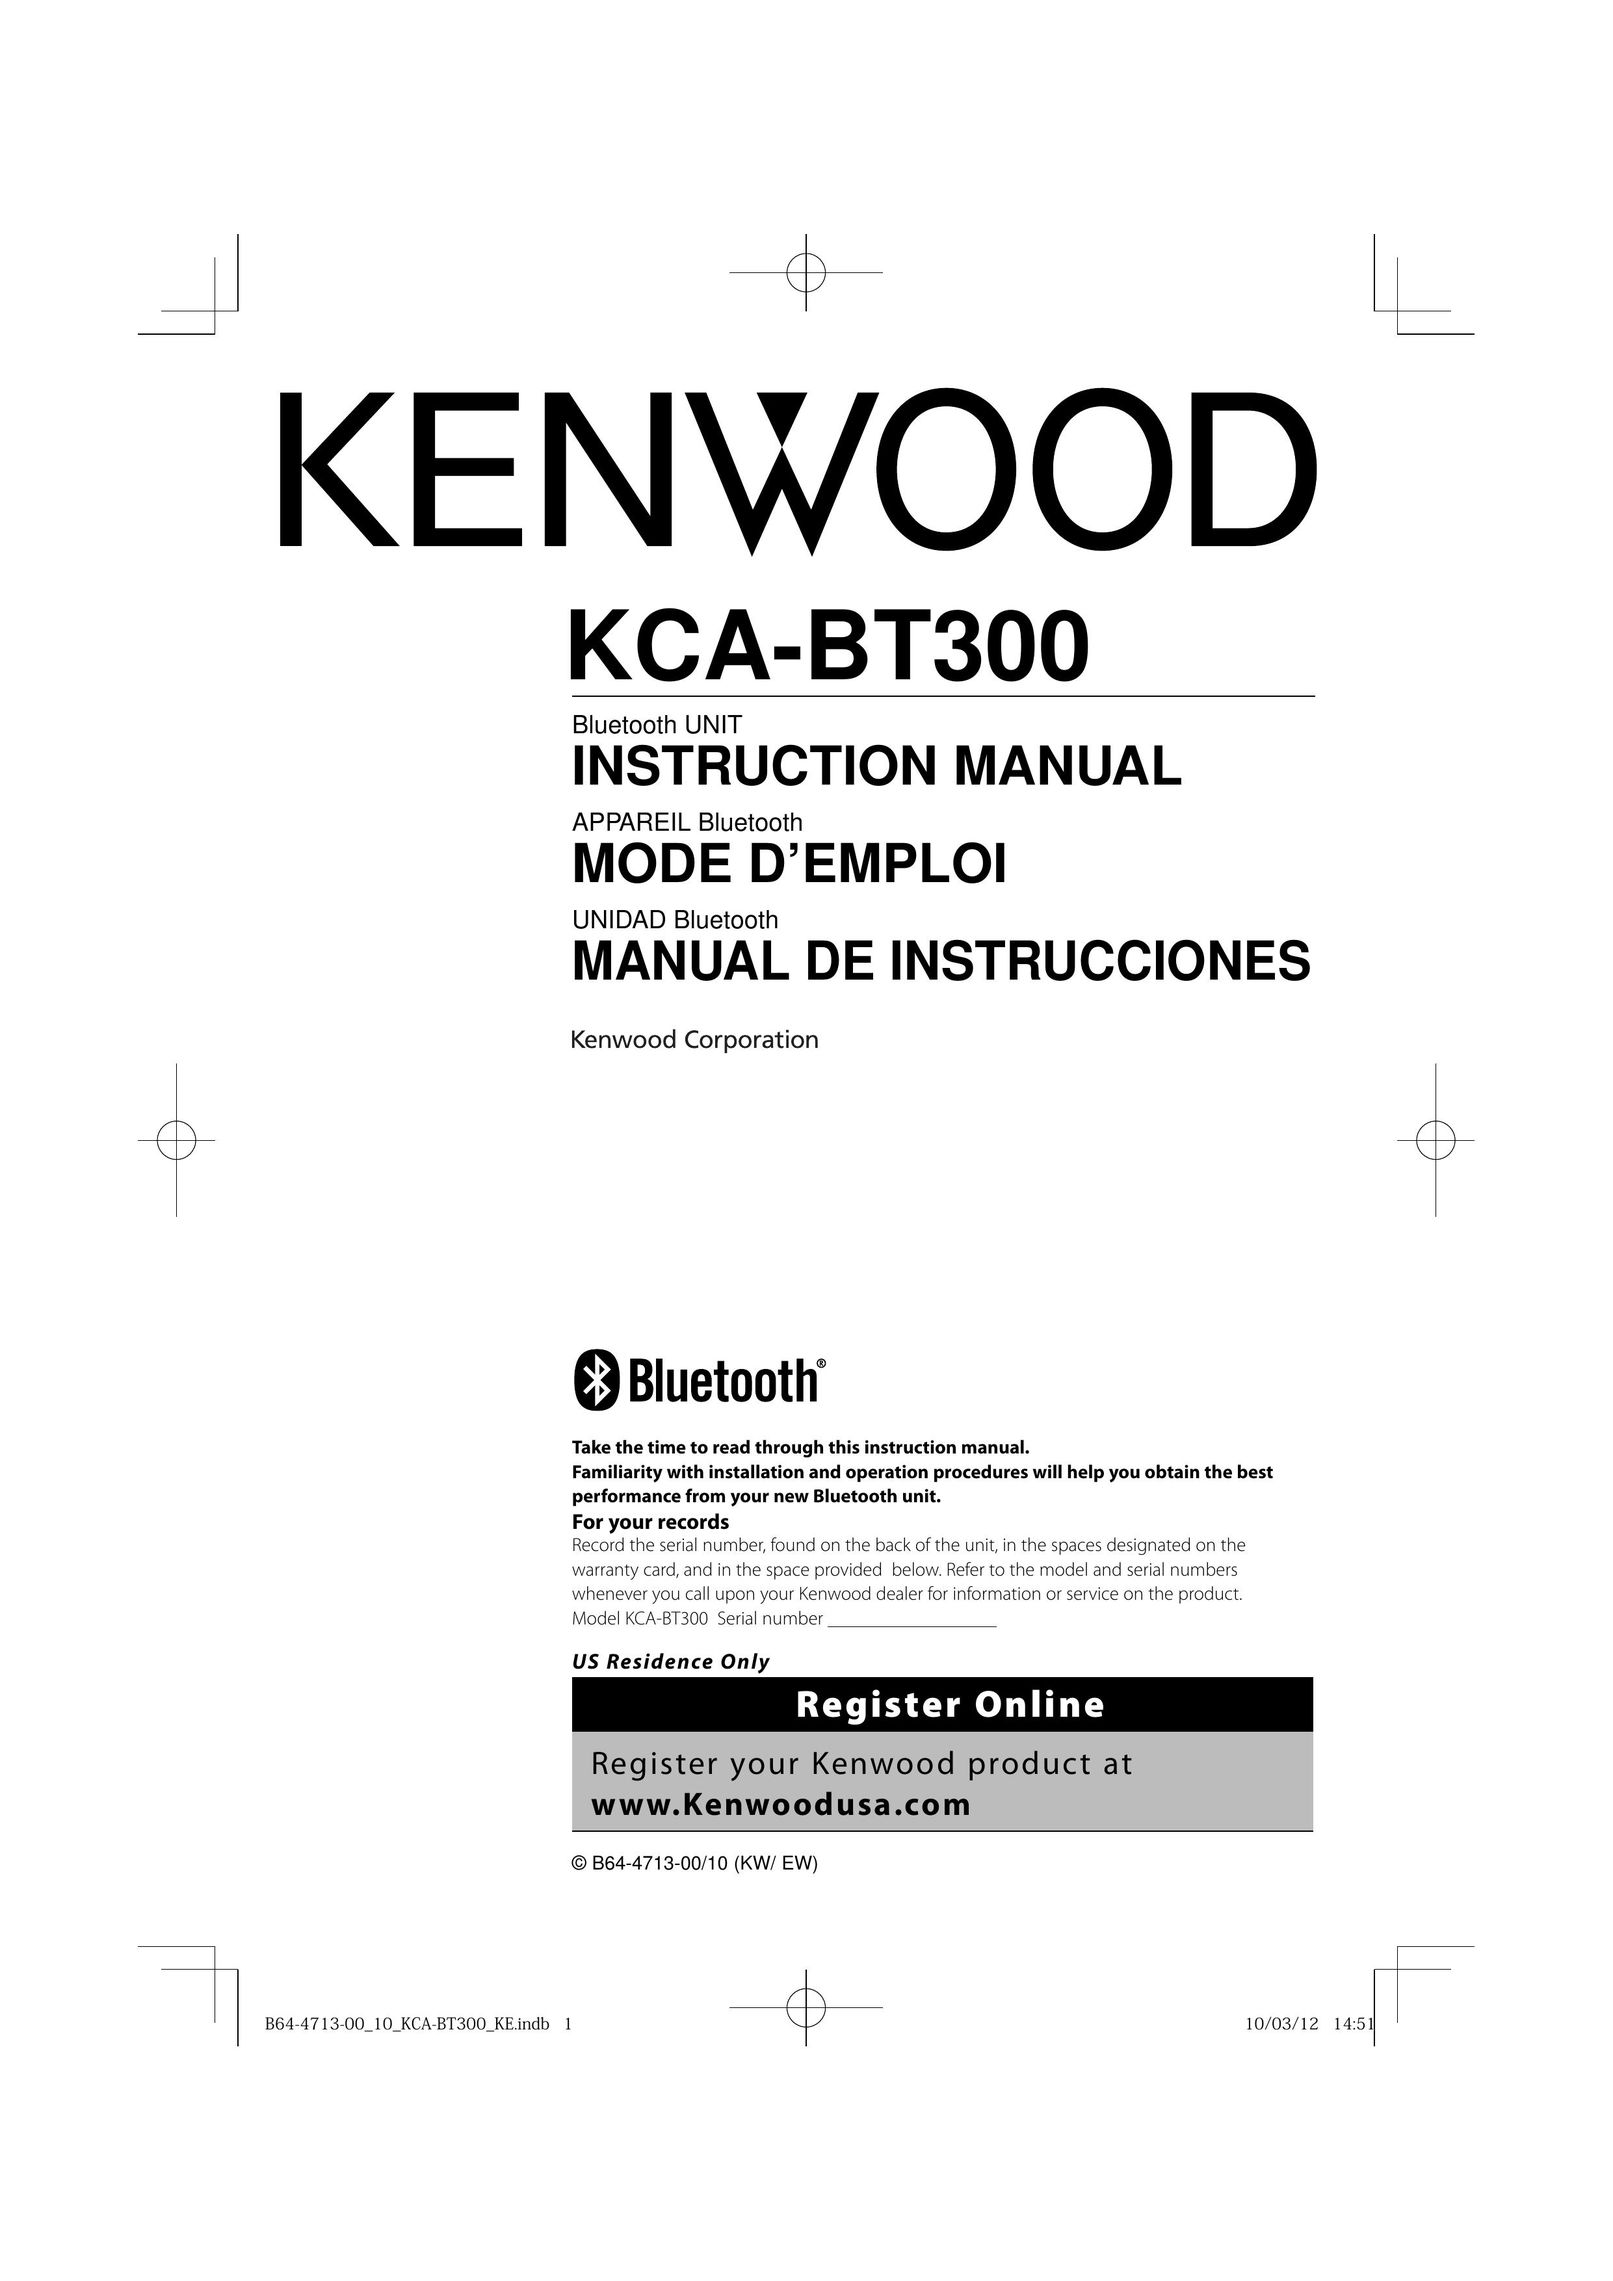 Kenwood KCA-BT300 Bluetooth Headset User Manual